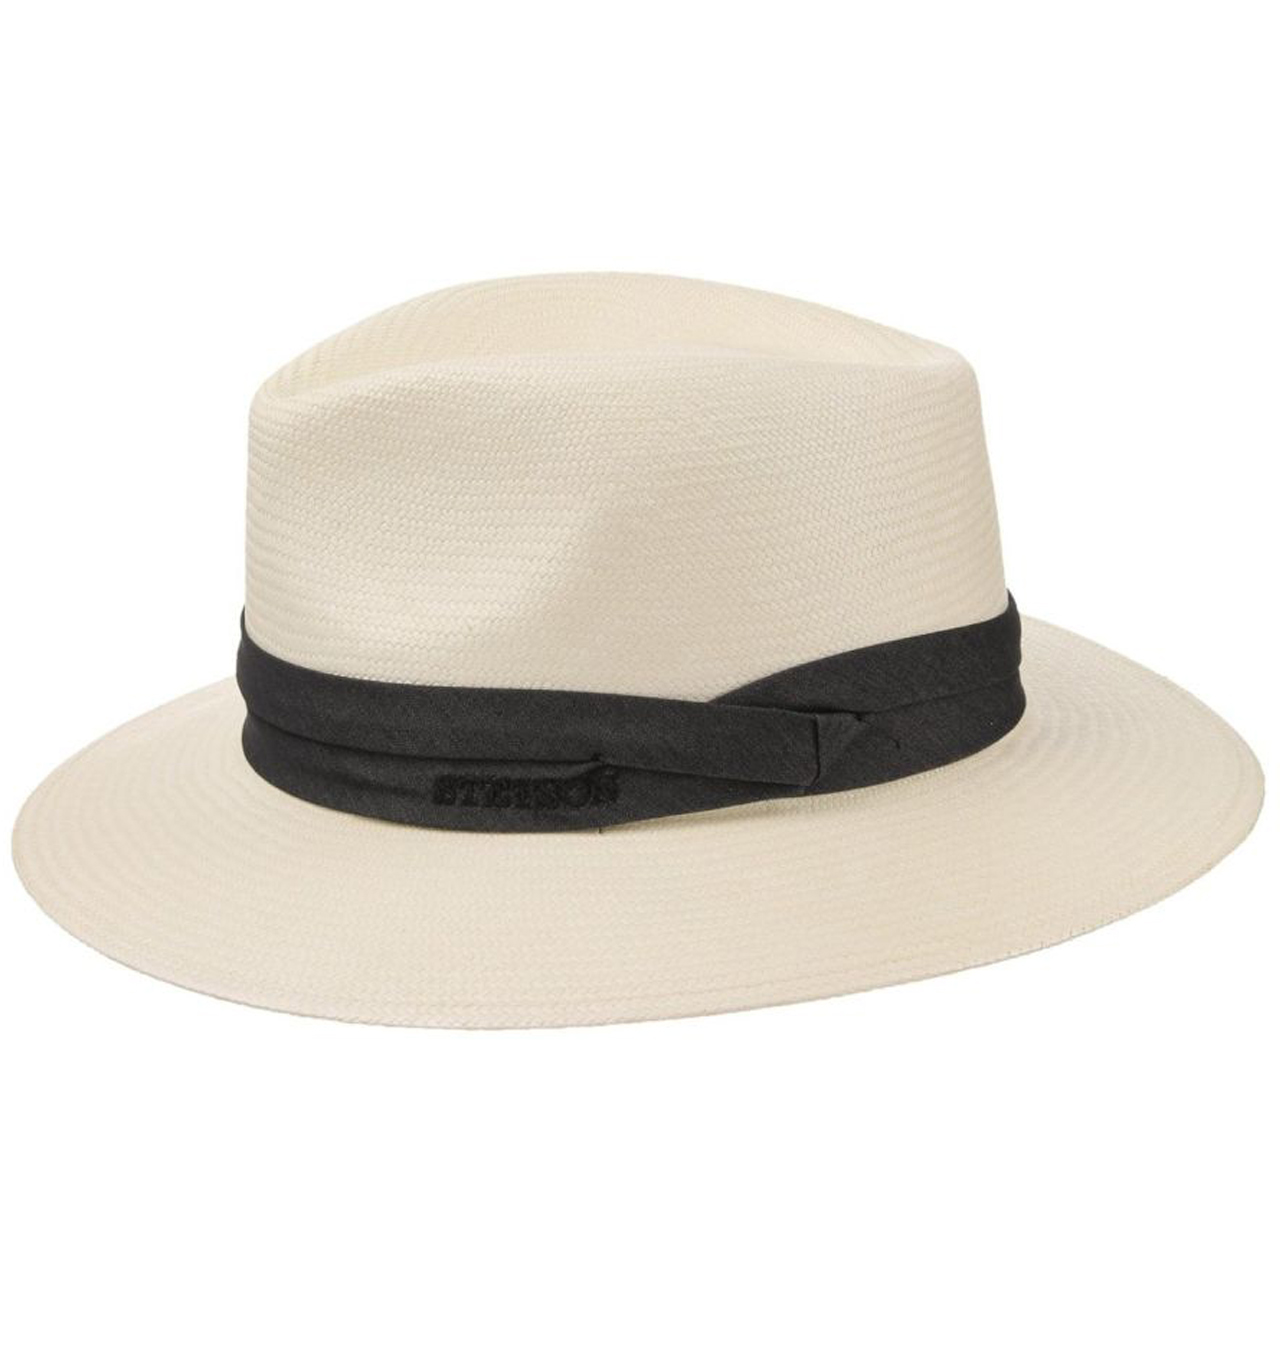 Stetson - Jefferson Bleached Panama Hat - Cream White